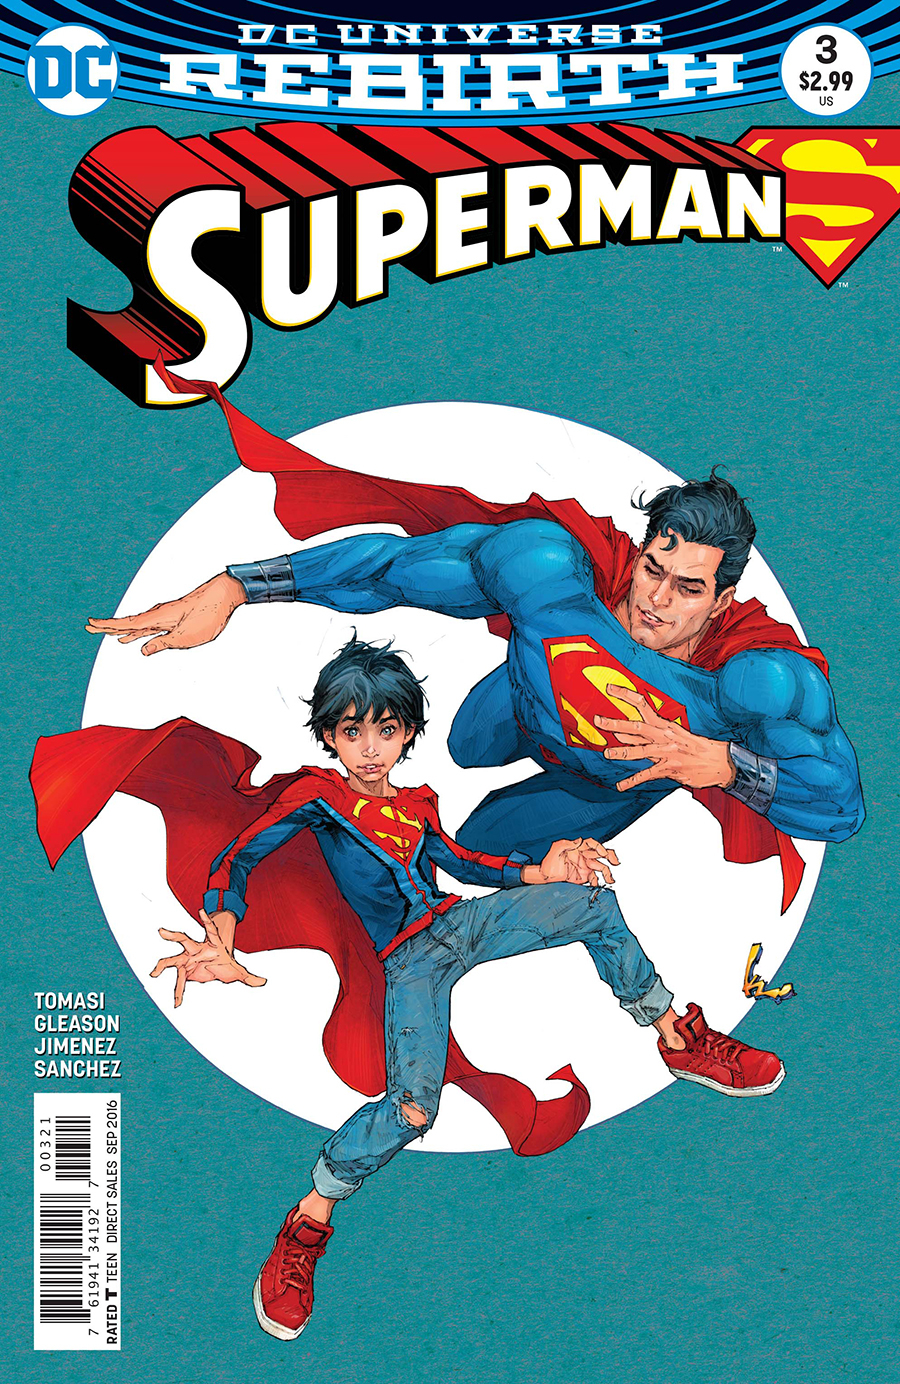 SUPERMAN #3 VAR ED